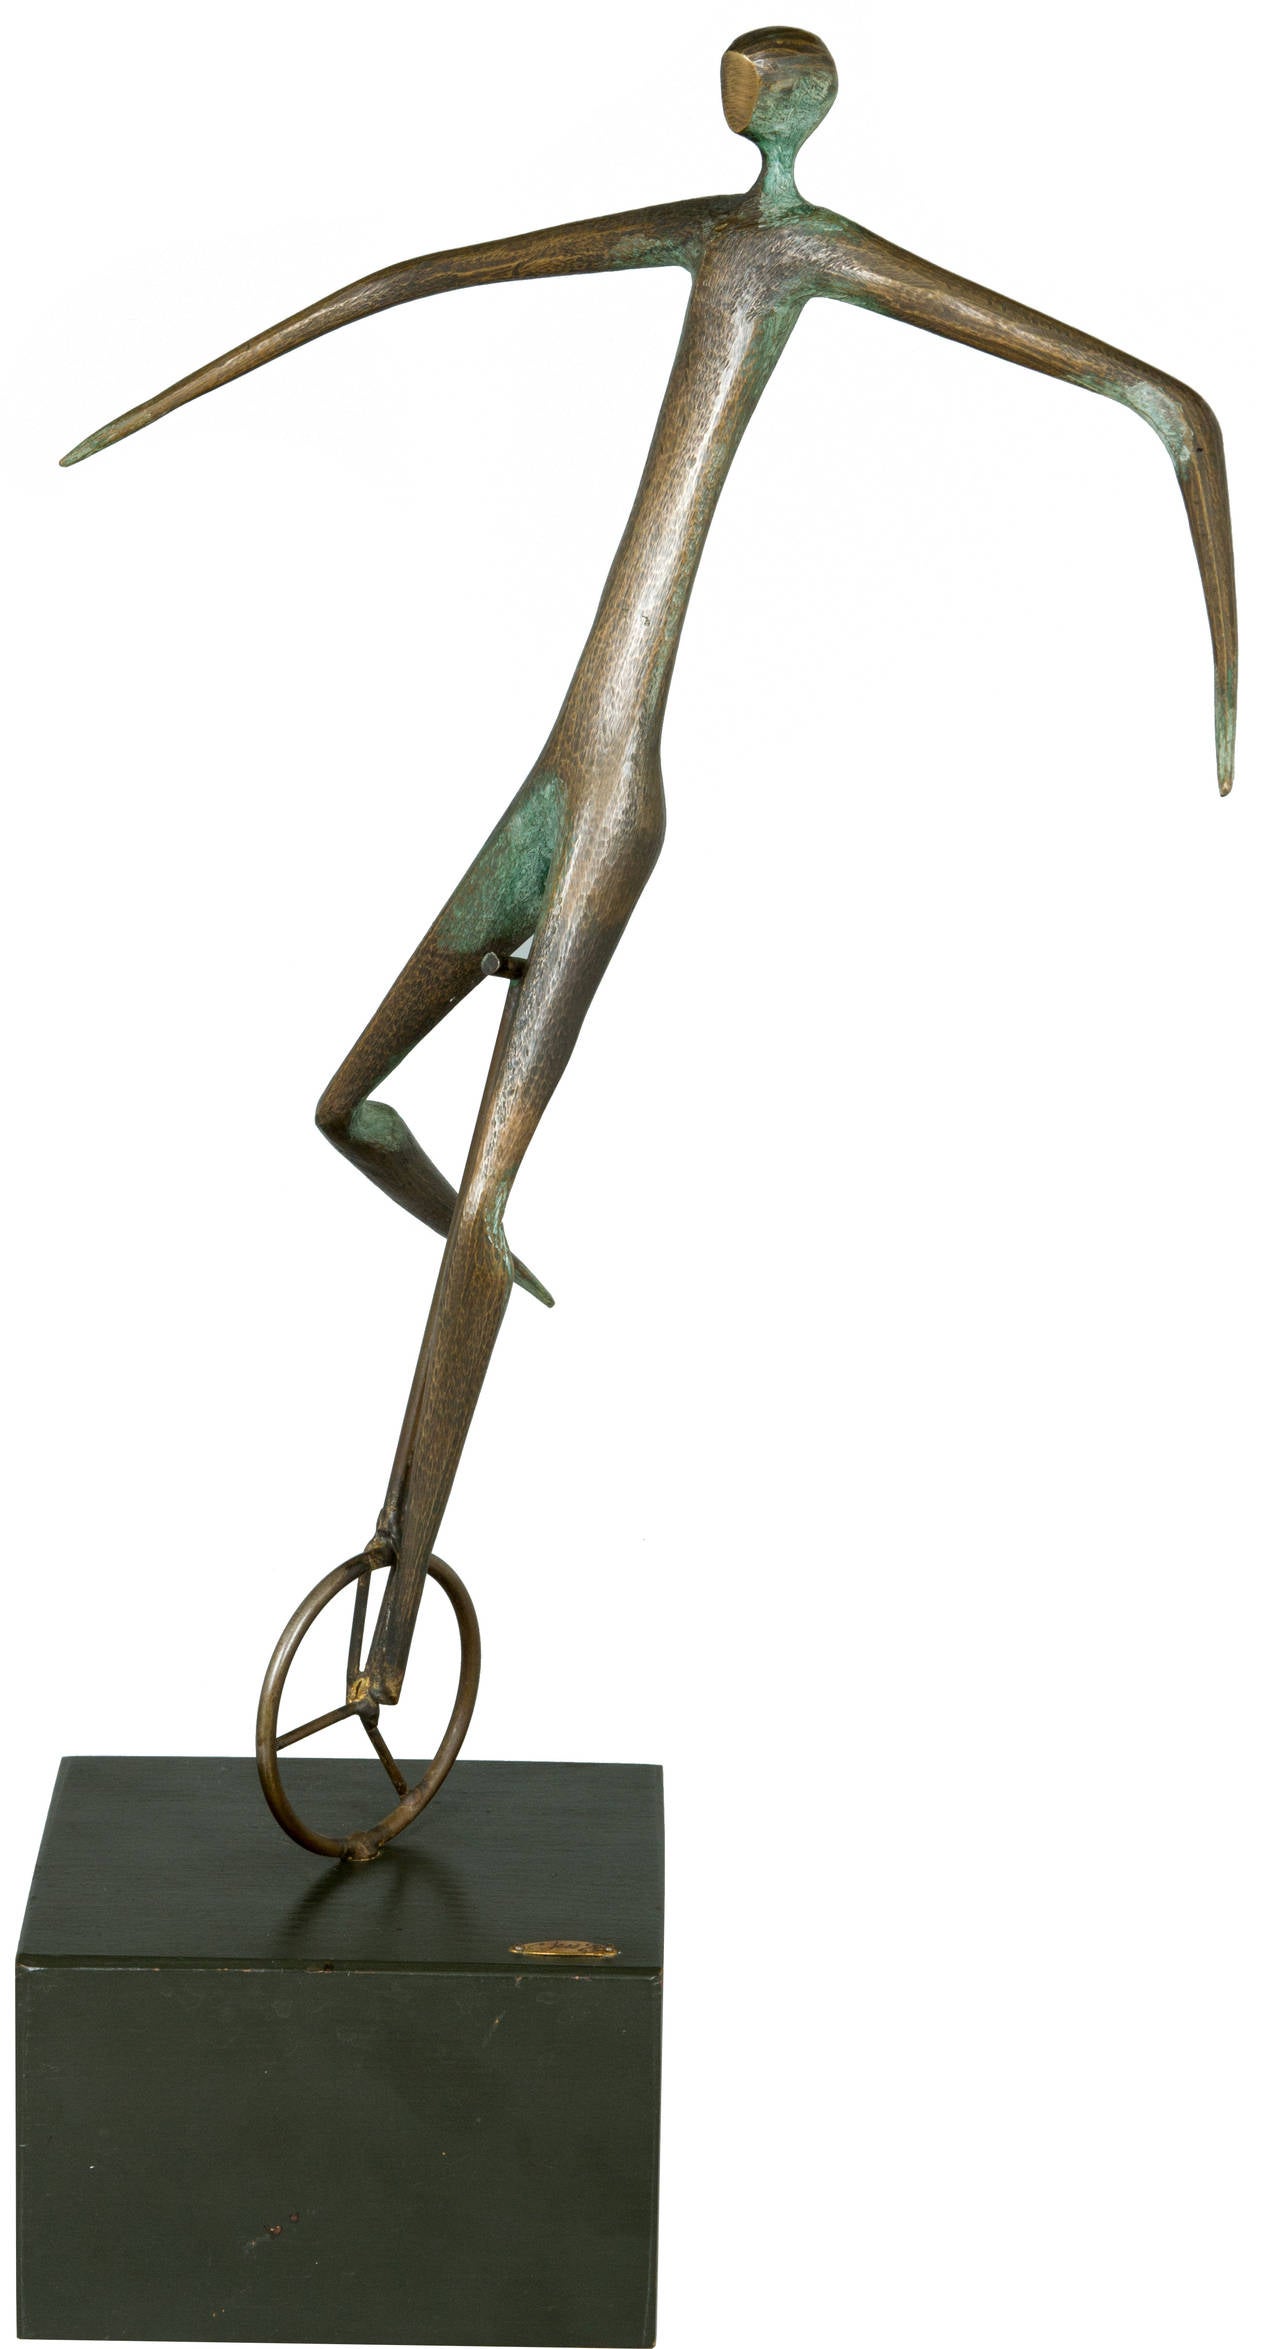 This is a modernist bronze sculpture.